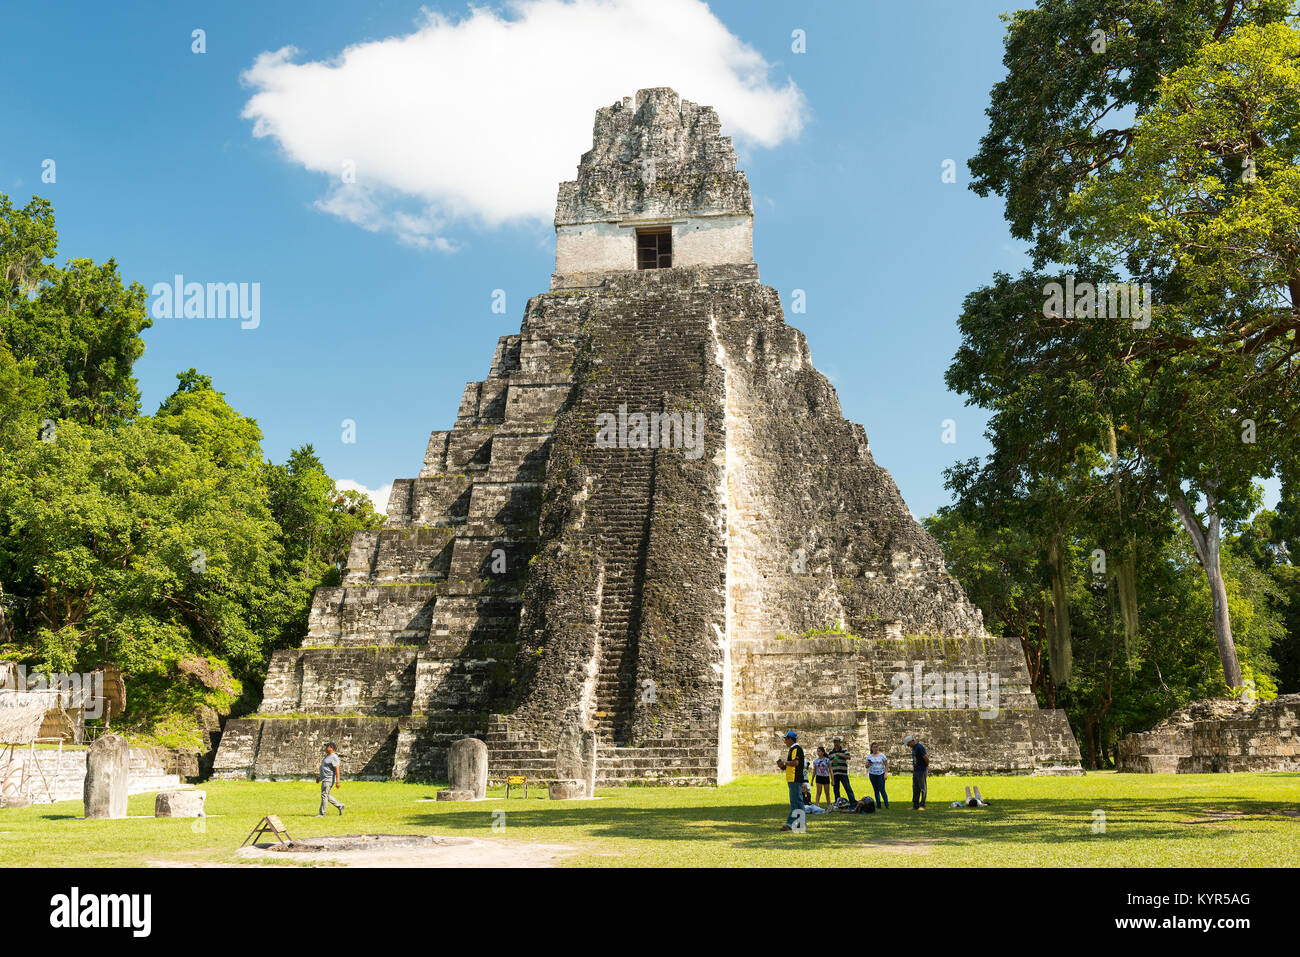 TIKAL, GUATEMALA - NOVEMBER 26: Unidentified people veiw Temple I, also known as the Jaguar Temple, in Tikal National Park on November 26, 2017 in Tik Stock Photo